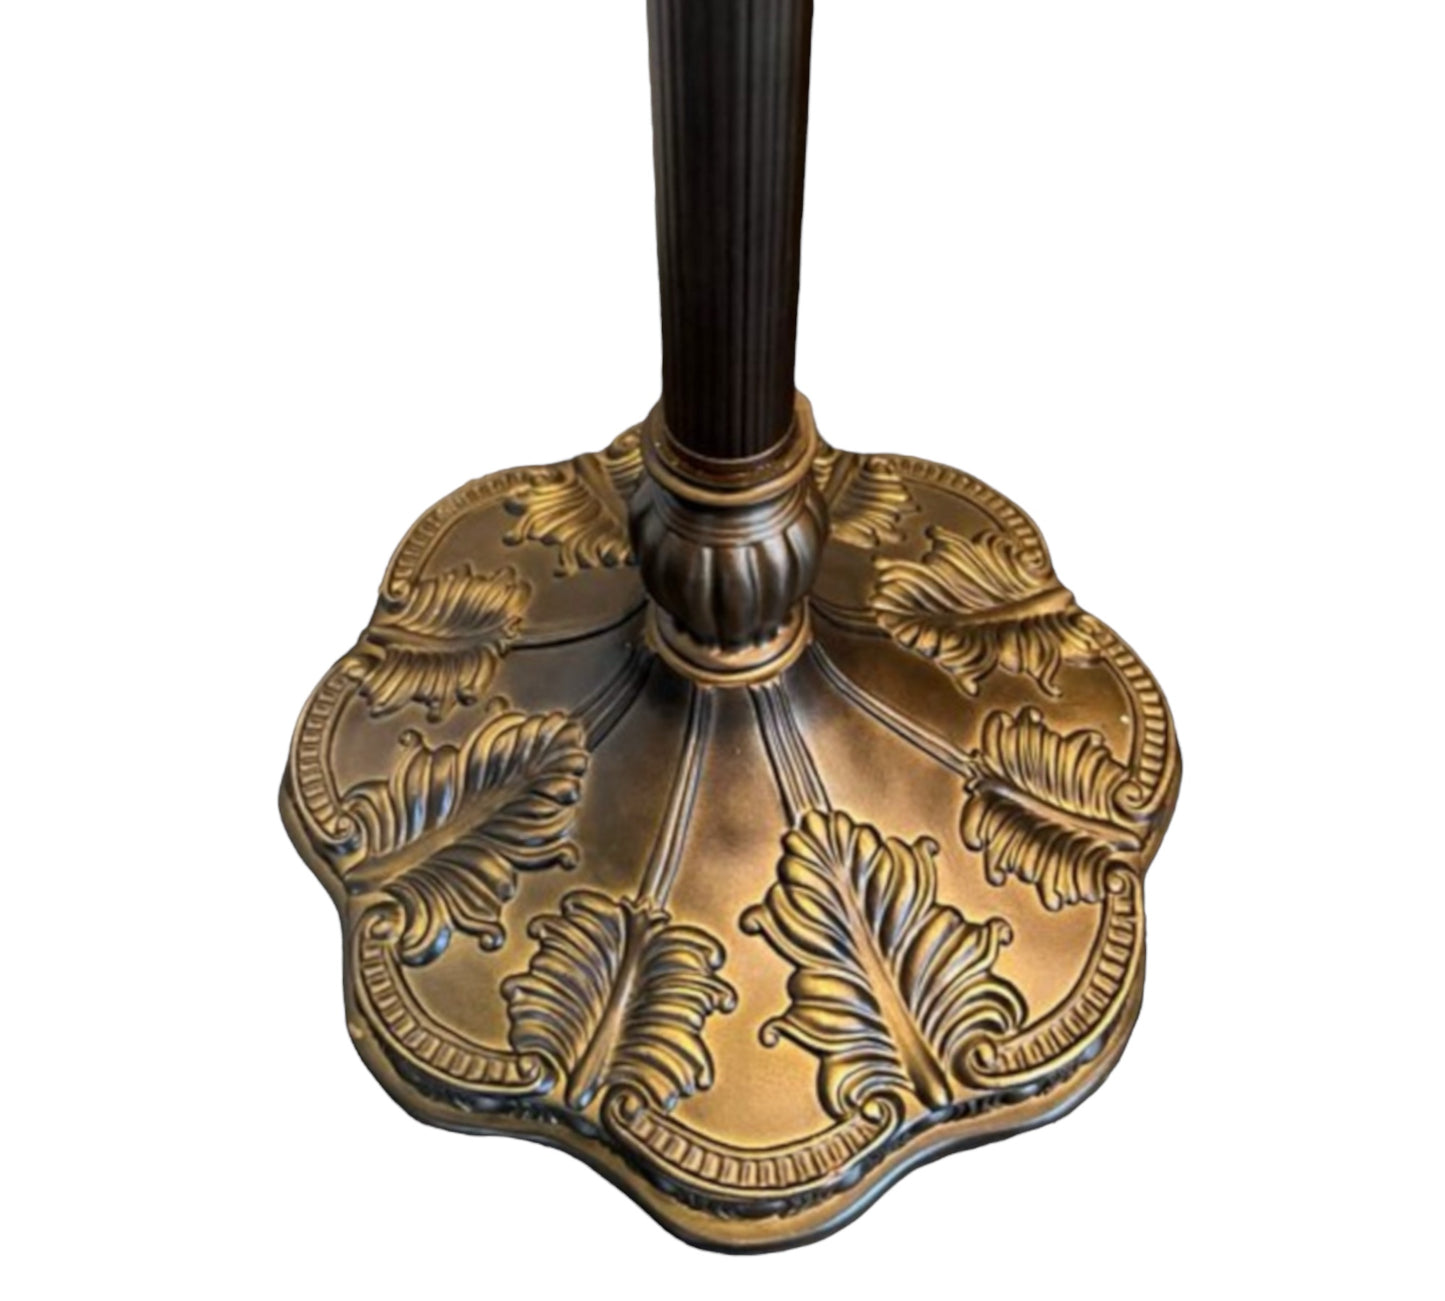 Tiffany Floor Lamp (12061H)